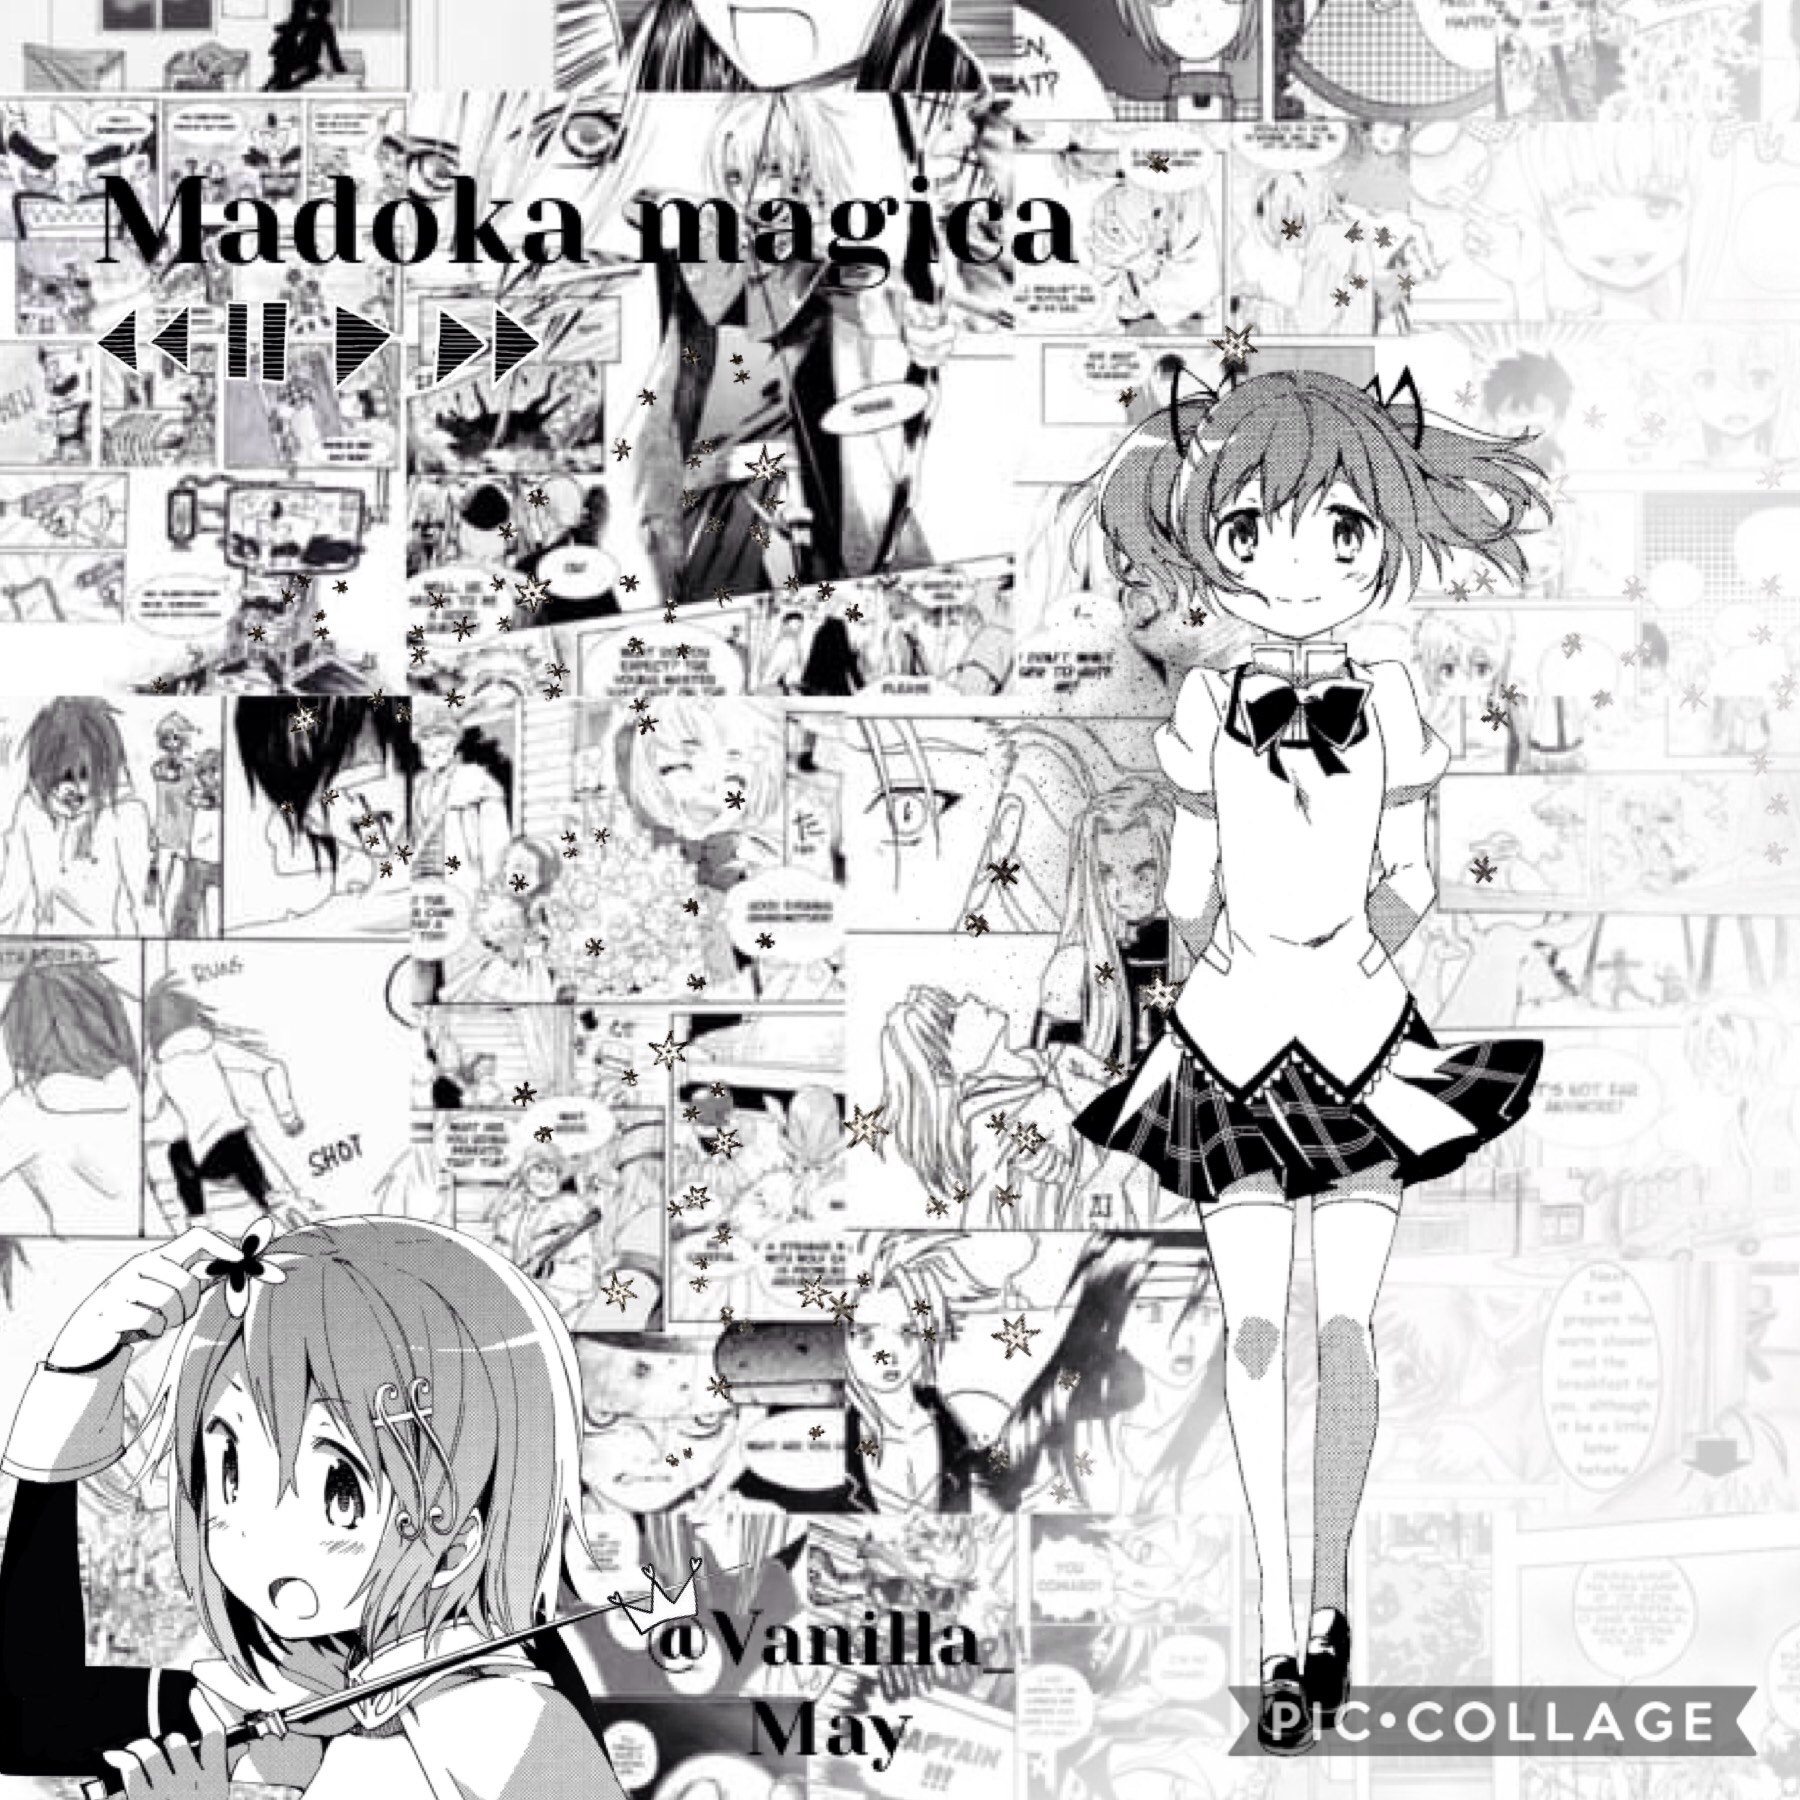 Madoka magica manga | madoka magica ~ I HAVE FINALLY FOUND A FRAND THAT LIKES ANIME PLS COMMENT IF U DO TO!